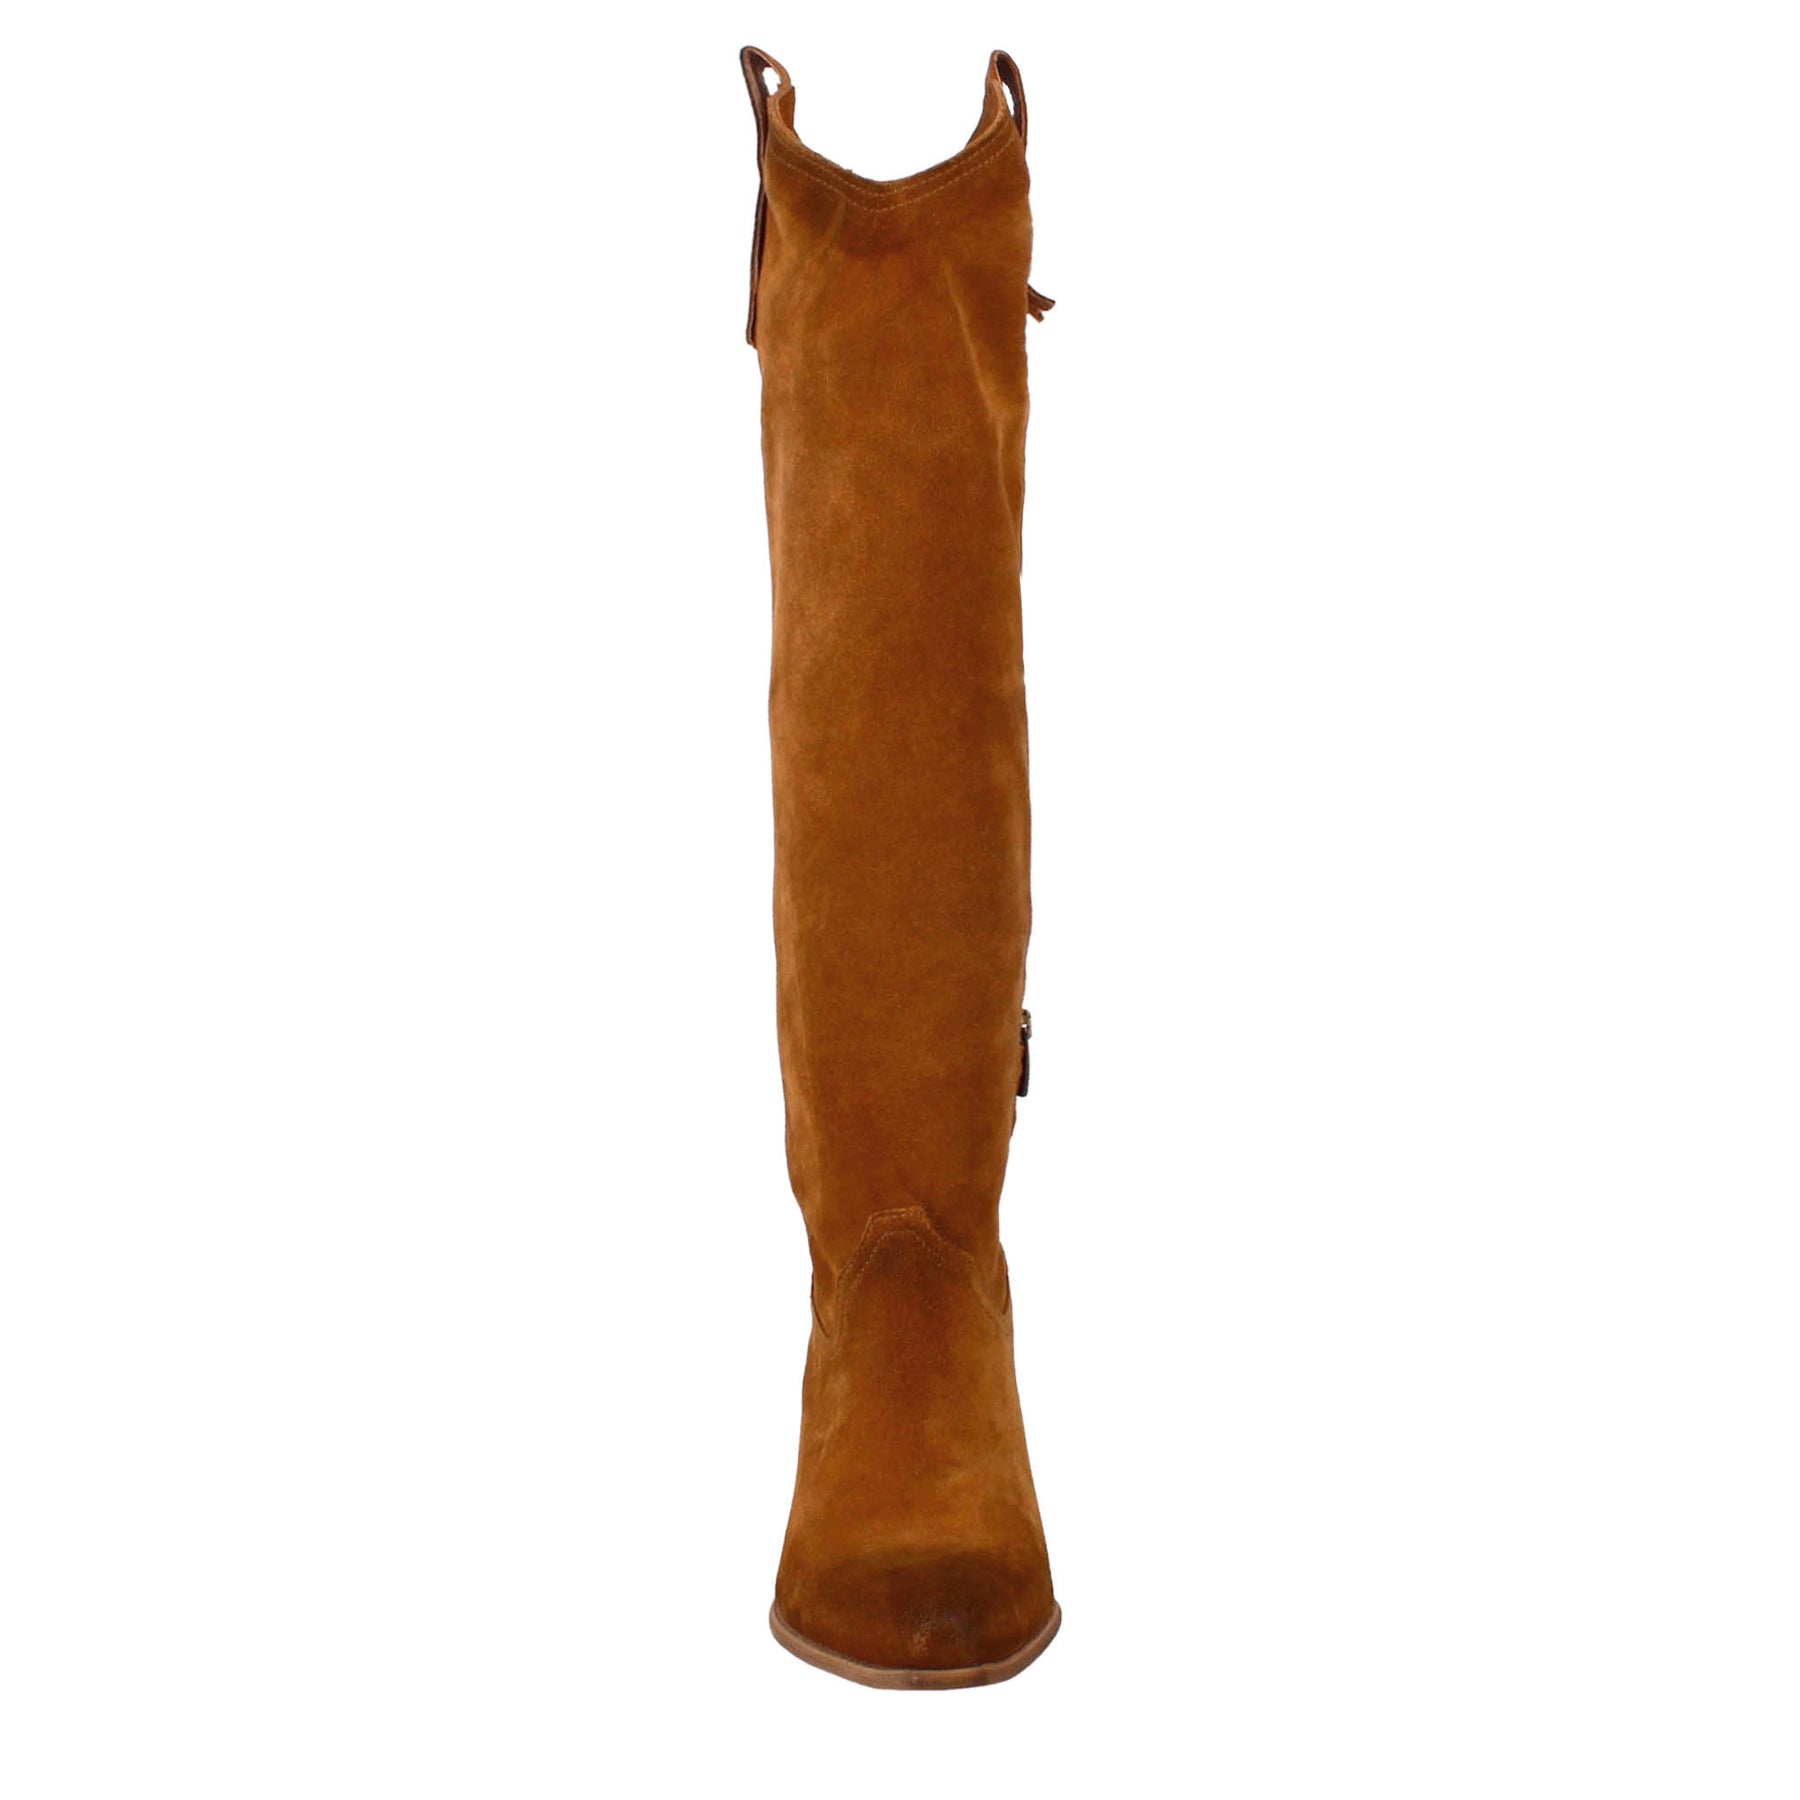 Women's Texan boots unlined in brown suede.